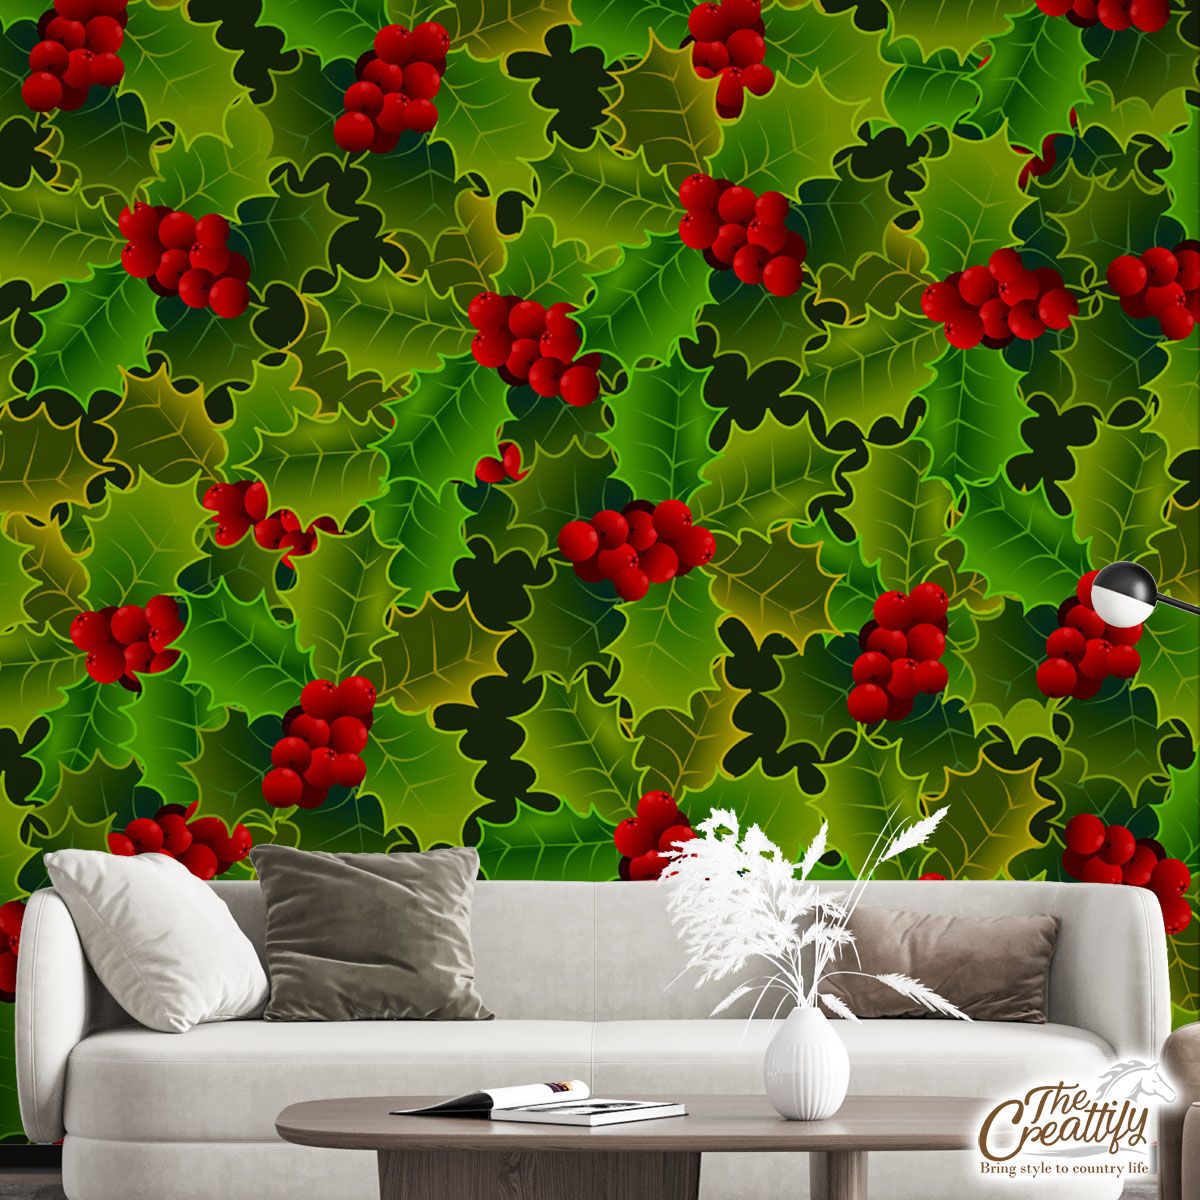 Holly Leaf, Oak Leaf Holly, Holly Berries Wall Mural